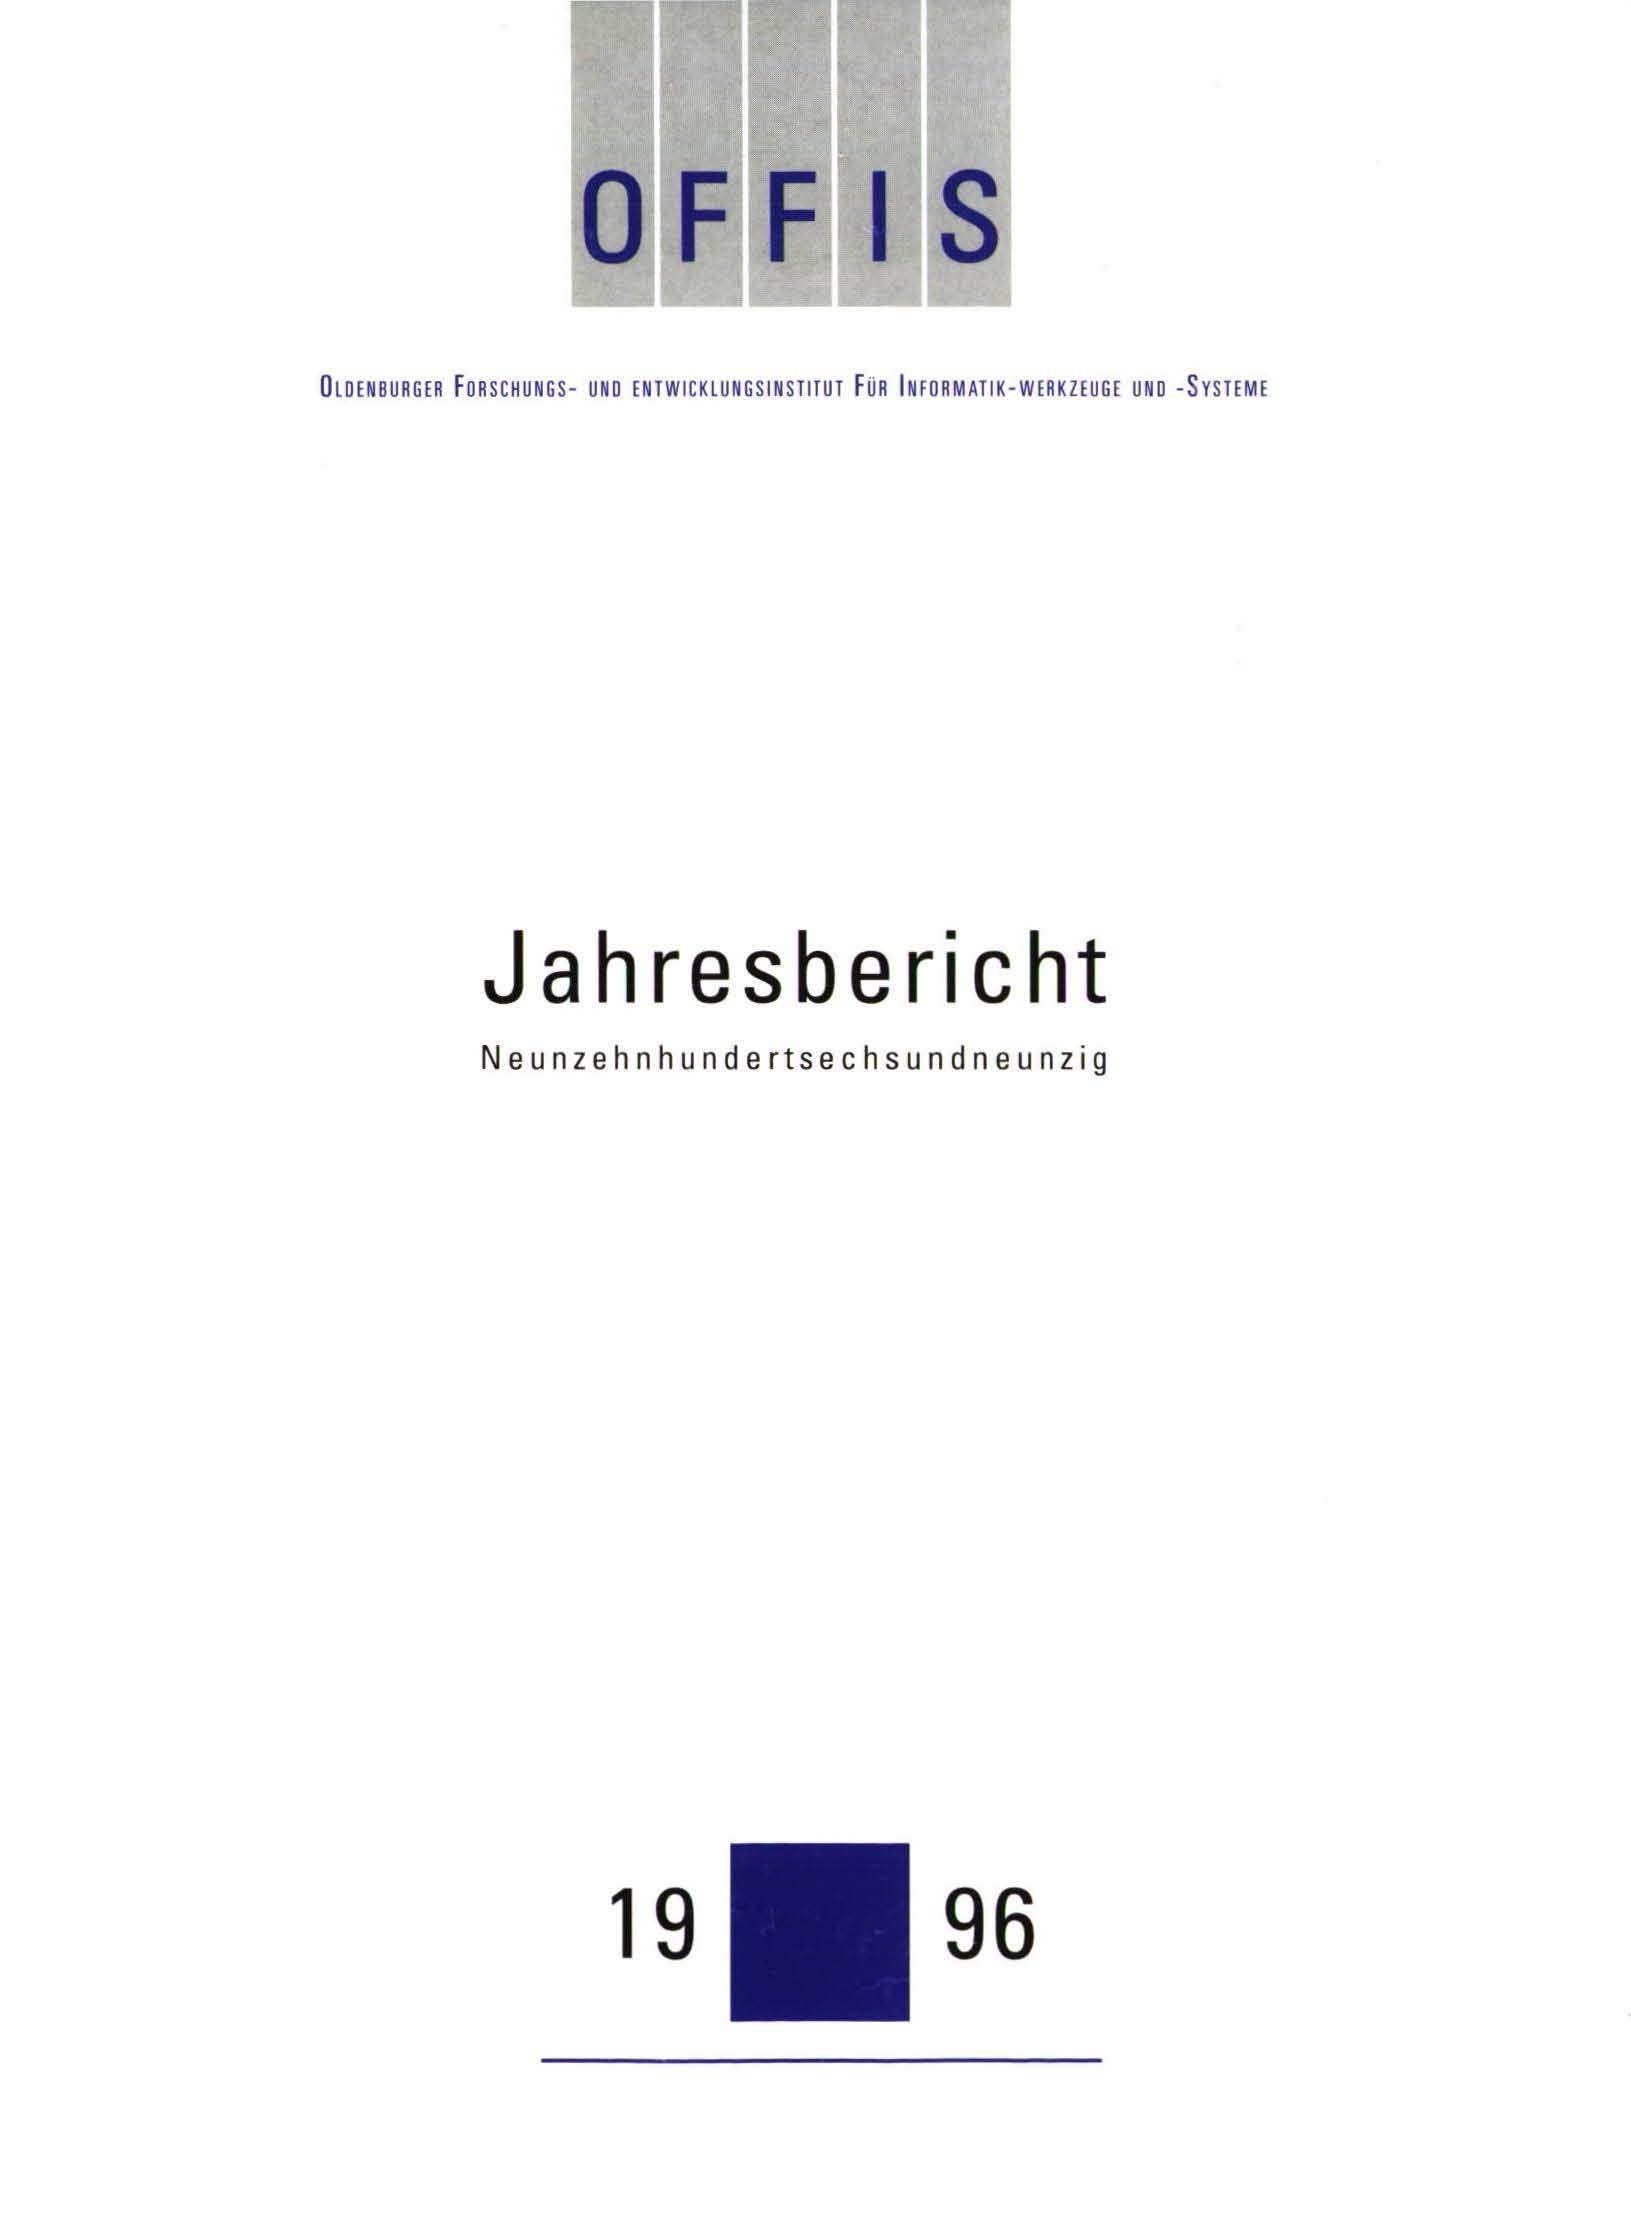 OFFIS Jahresbericht 1996